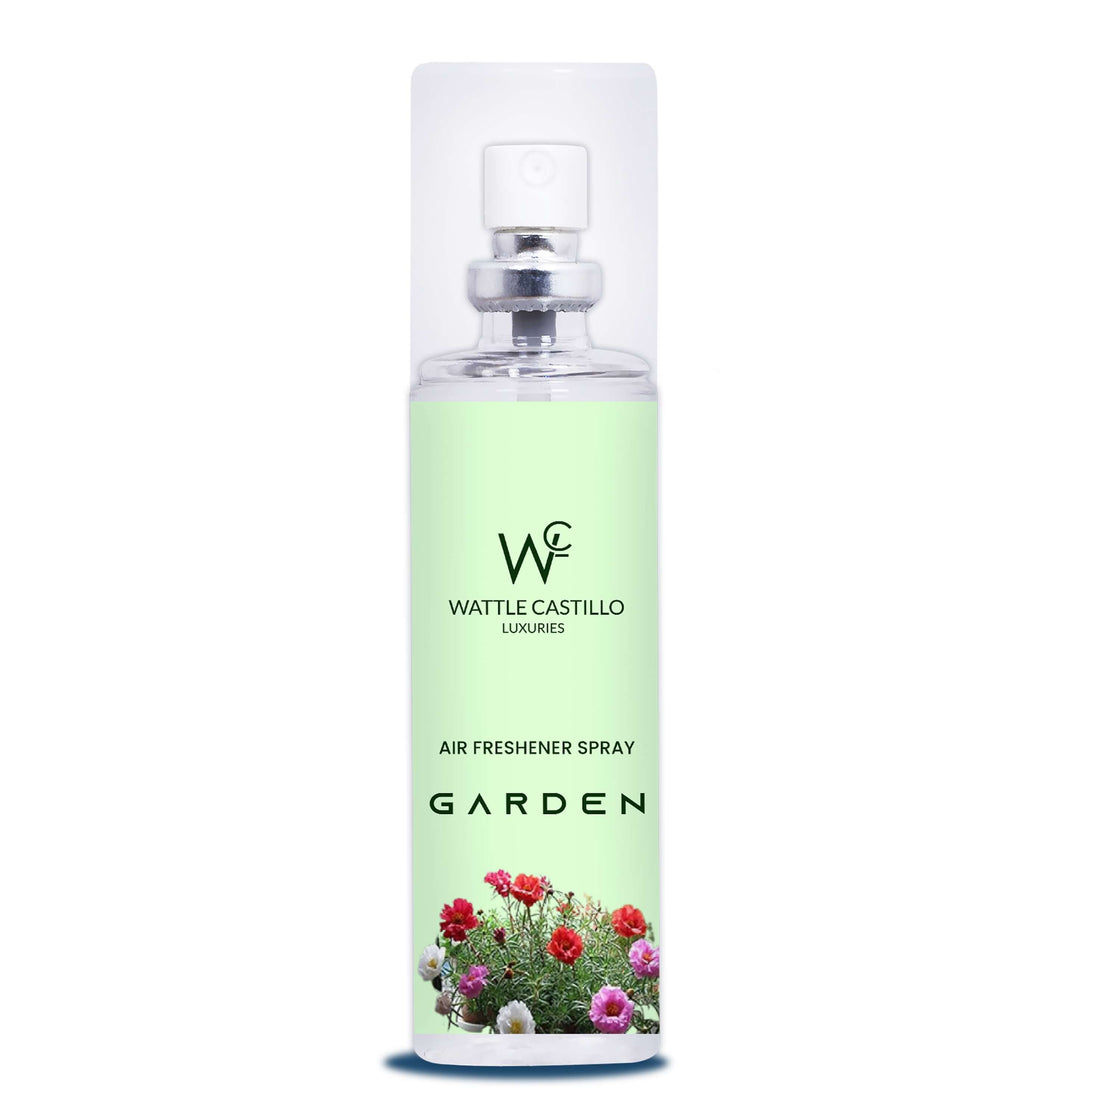 Wattle Castillo Garden Room Freshener Spray | Premium Air Freshener for Home & Office - Passion & Alive - Wattle Castillo